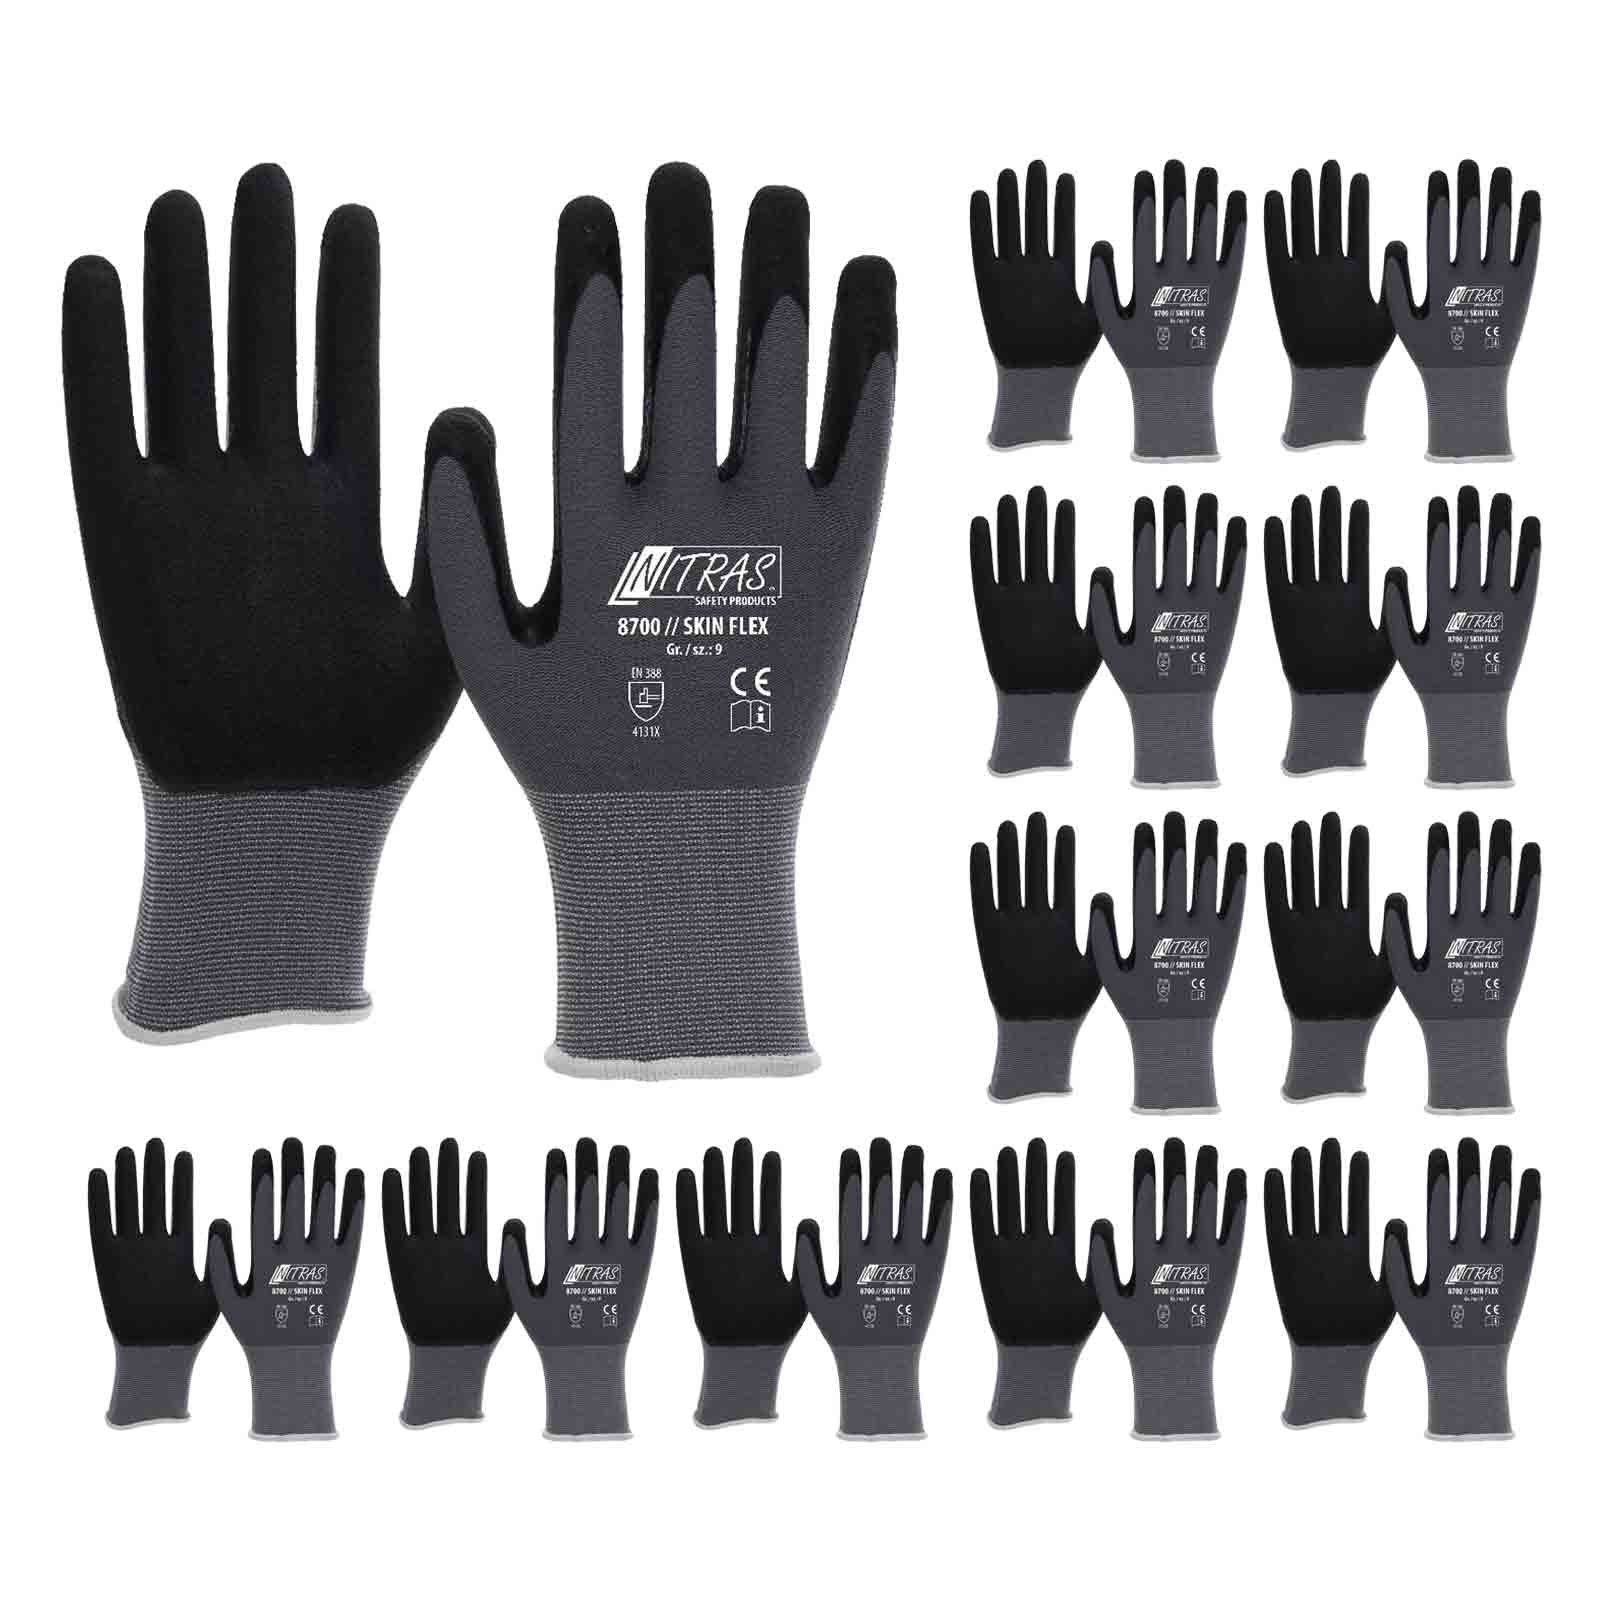 Nitras Nitril-Handschuhe Skin-Flex Strickhandschuh 8700, Nitril PU Schaum, VPE 12 Paar (Spar-Set)